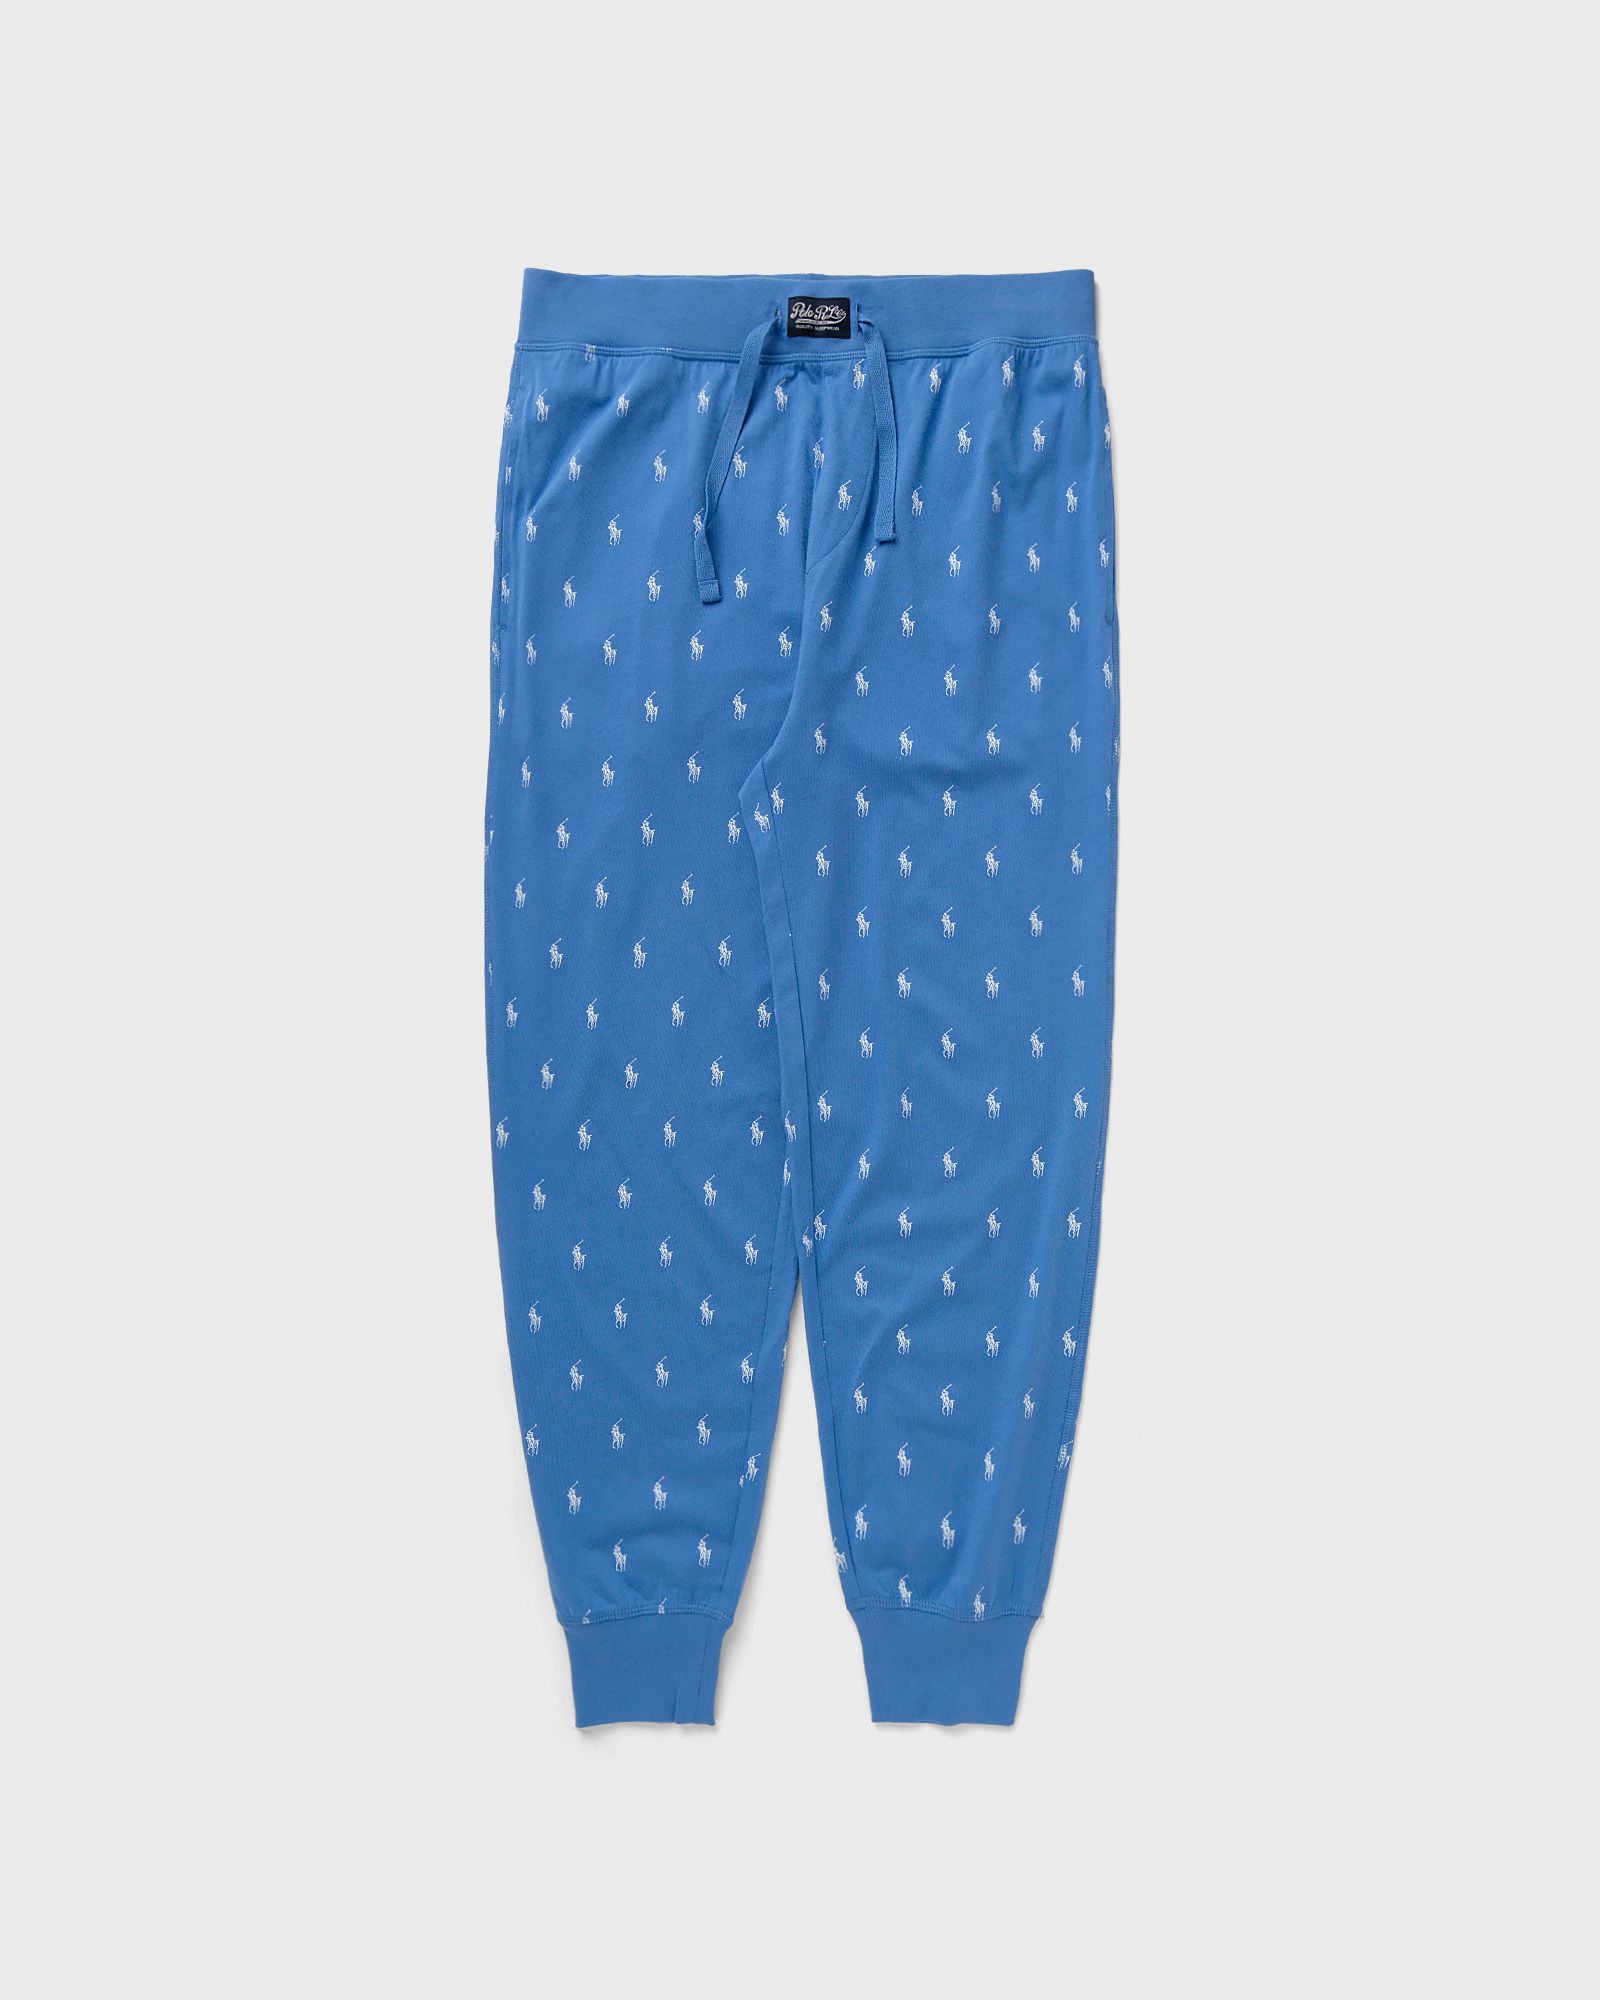 Polo Ralph Lauren - jogger-sleep-bottom men sleep- & loungewear blue in größe:xl